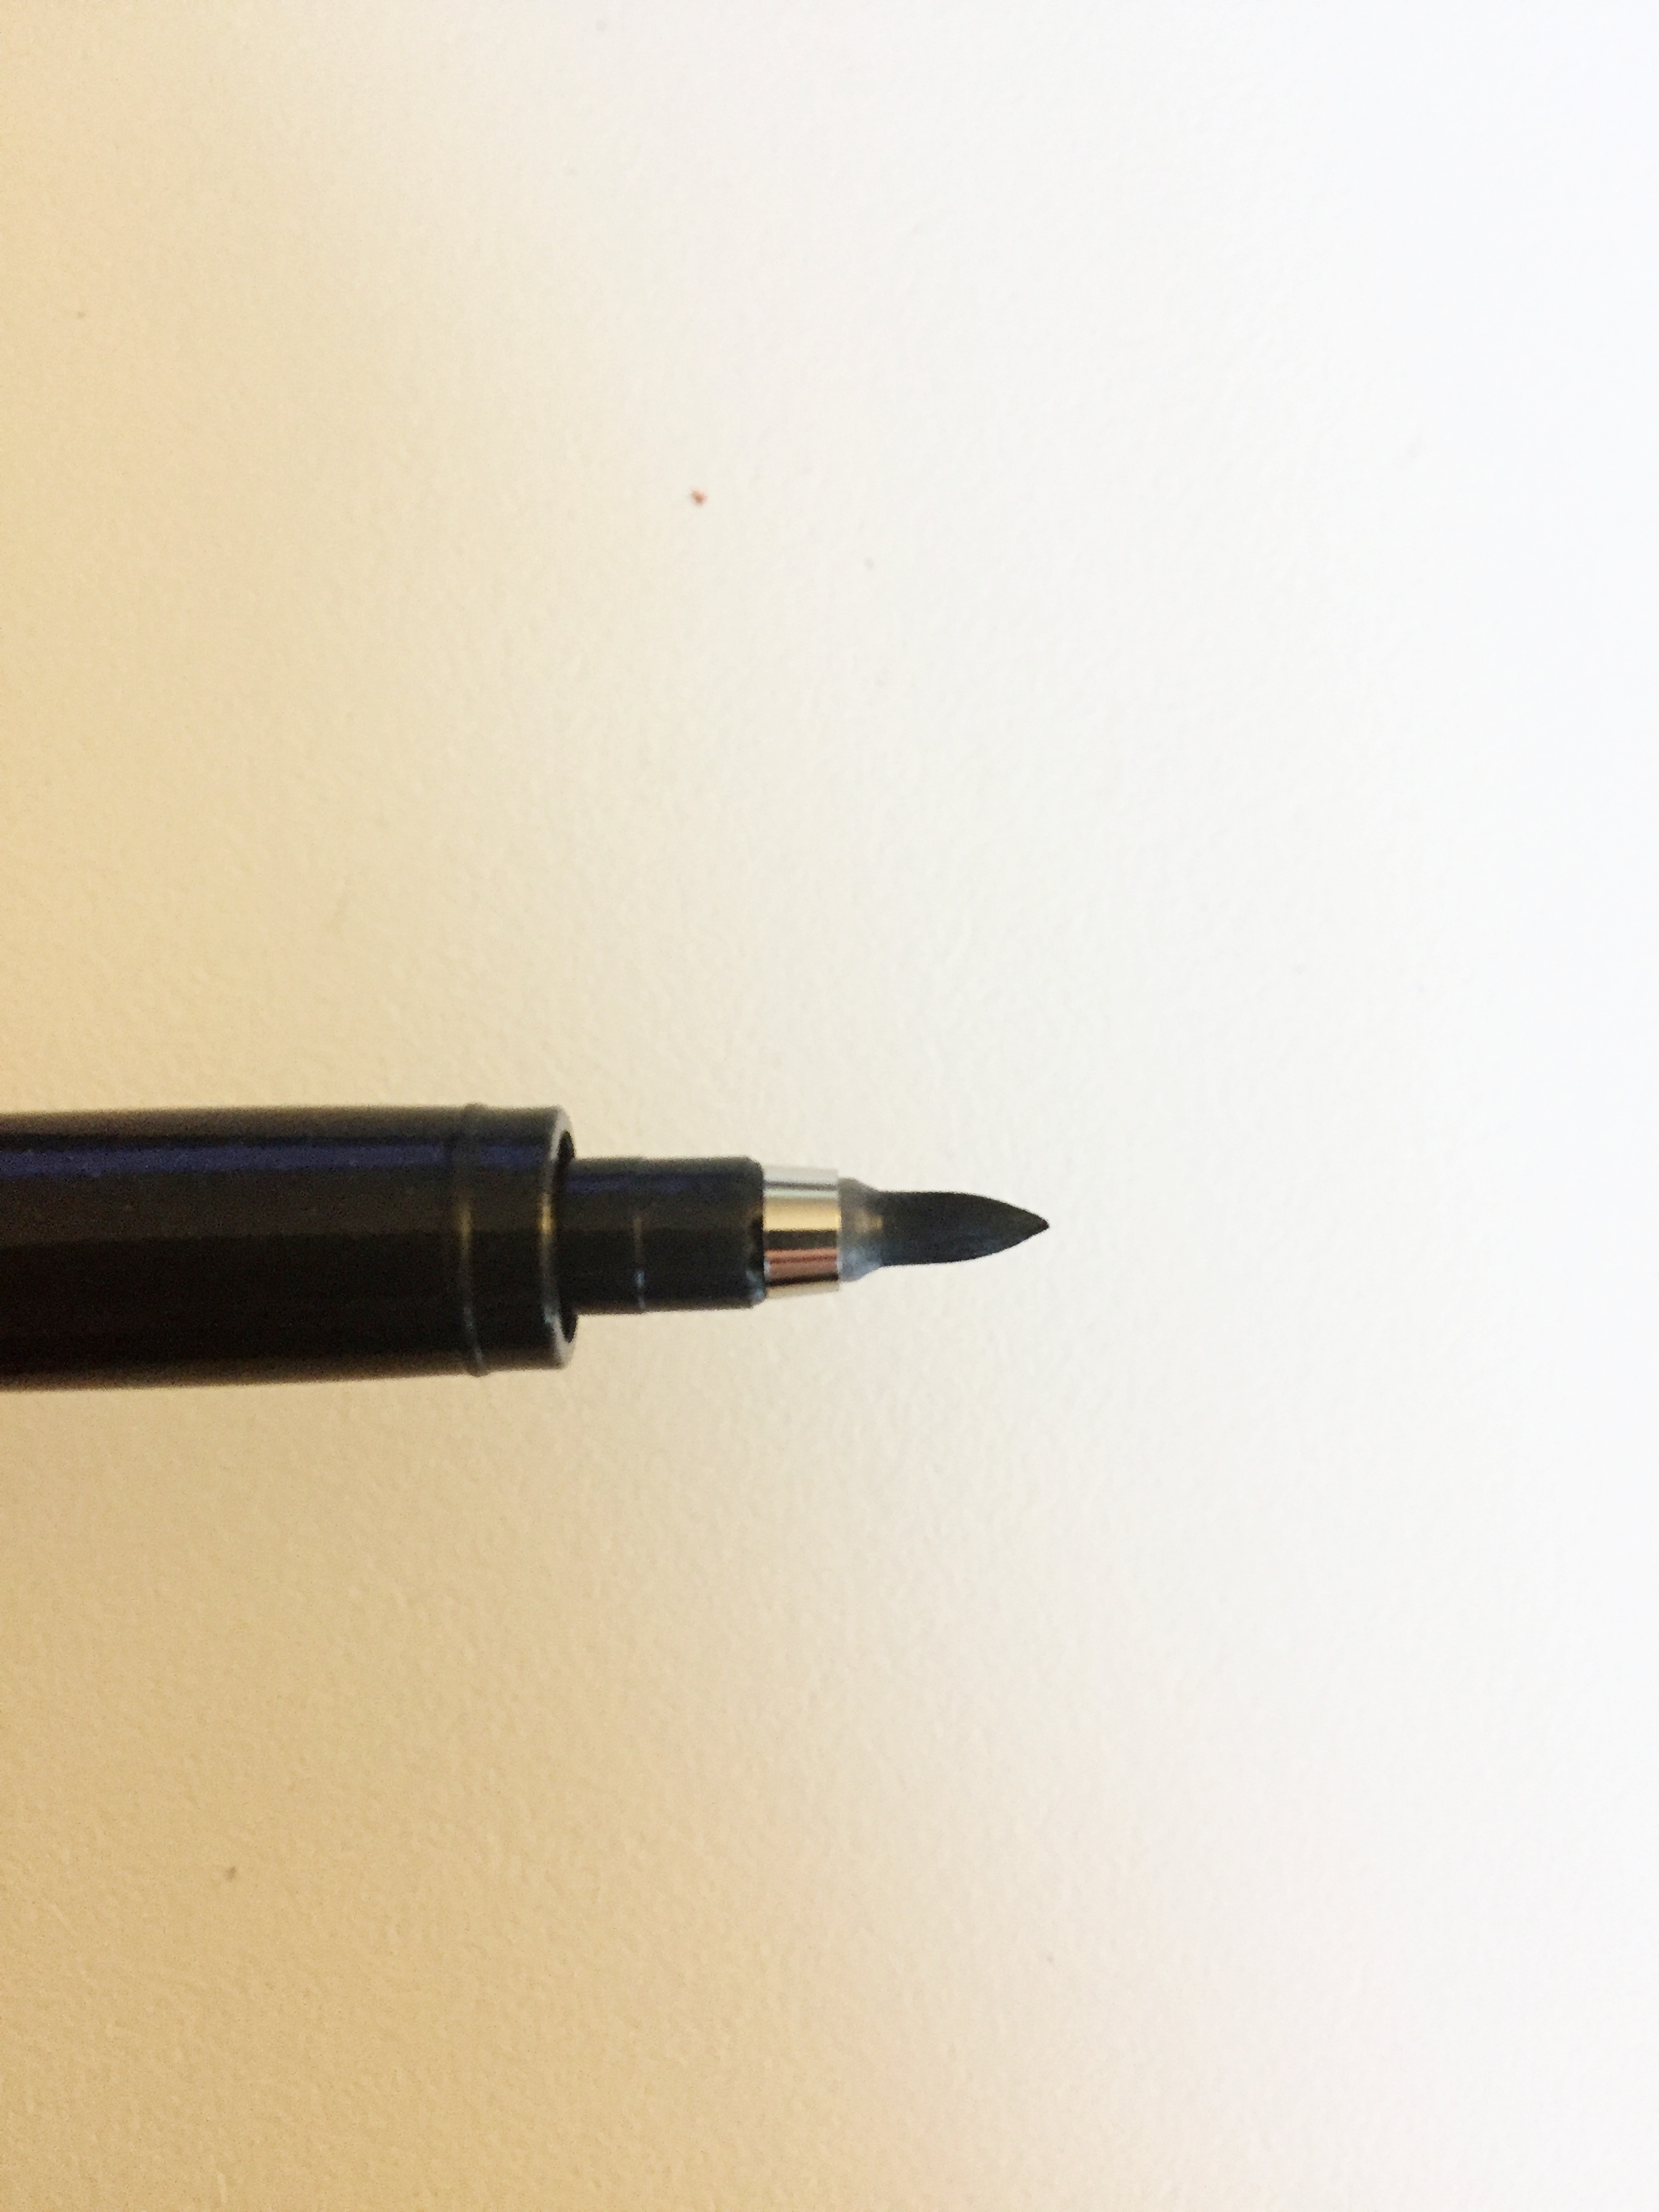 Zebra Medium Tip Japanese Brush Pen WF3 — Washi Arts